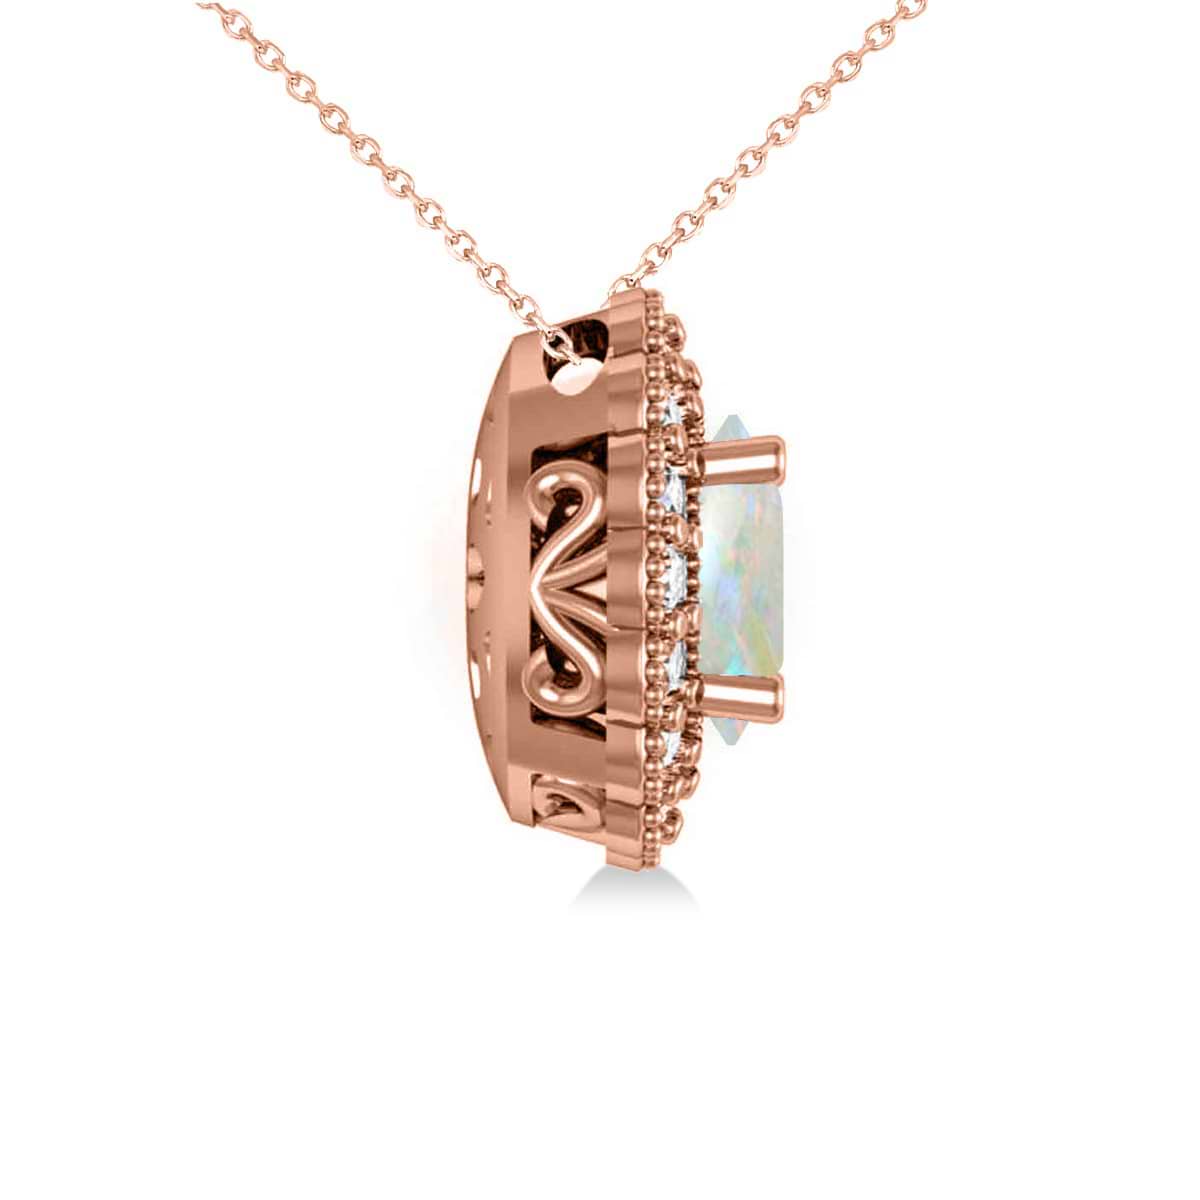 Opal & Diamond Floral Oval Pendant Necklace 14k Rose Gold (2.98ct)